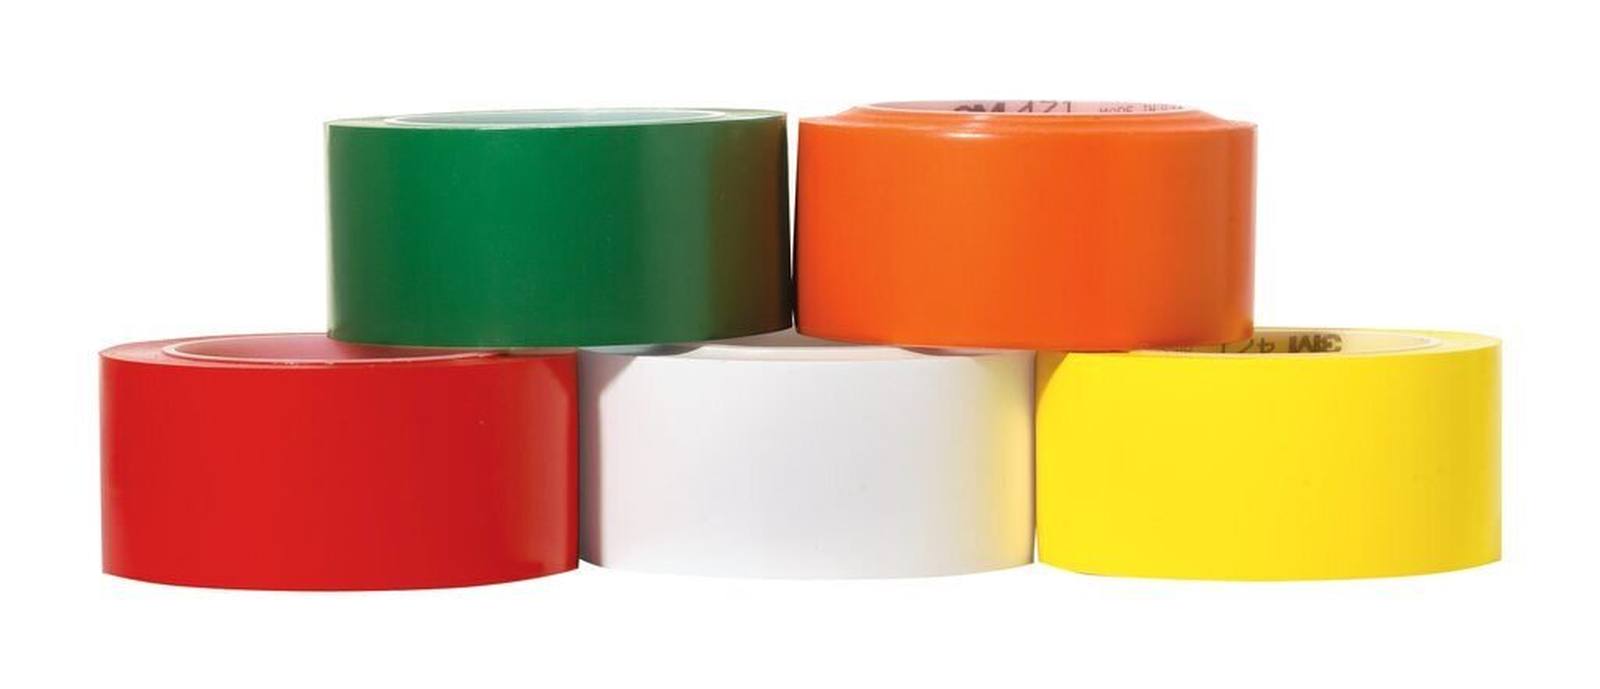 3M soft PVC adhesive tape 471 F, orange, 50 mm x 33 m, 0.13 mm